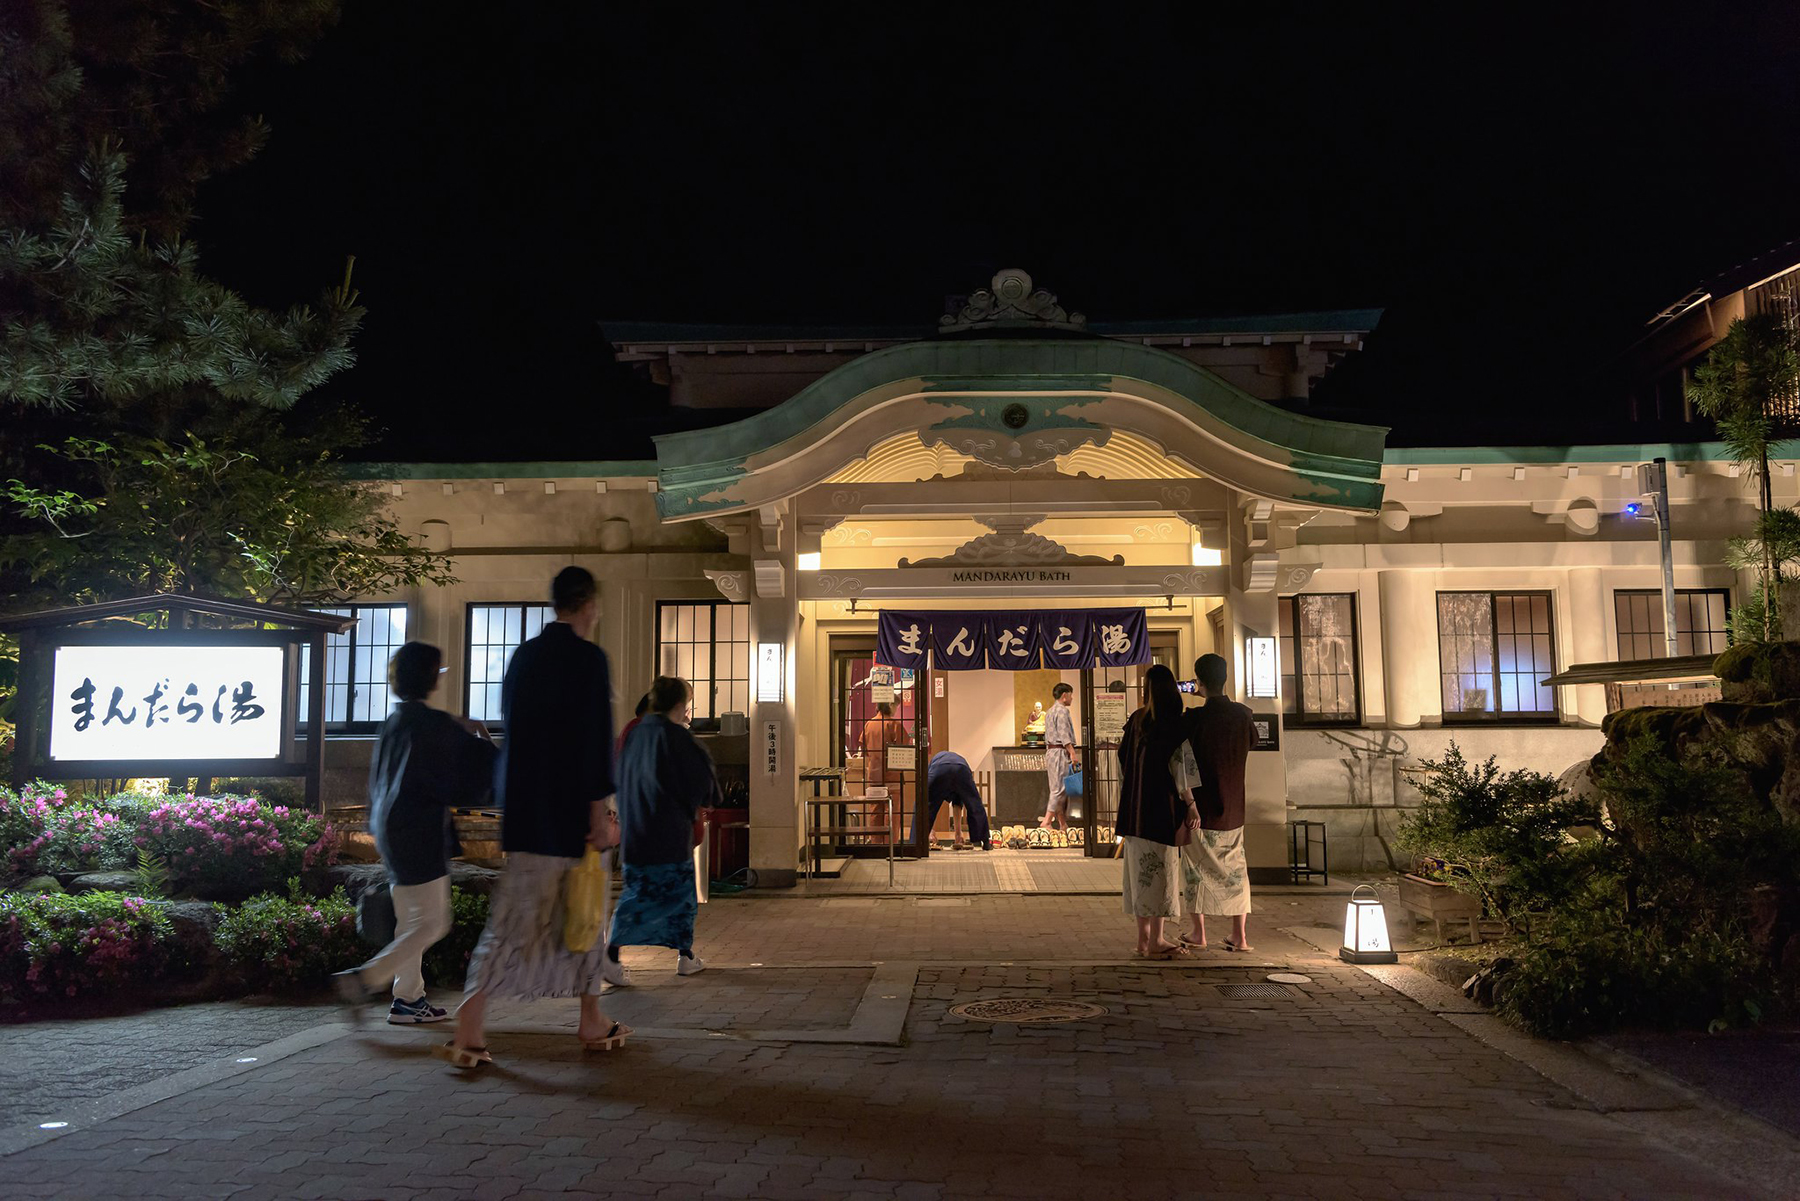 Yukata wearing tourists at Mandara yu bathhouse Kinosaki Onsen